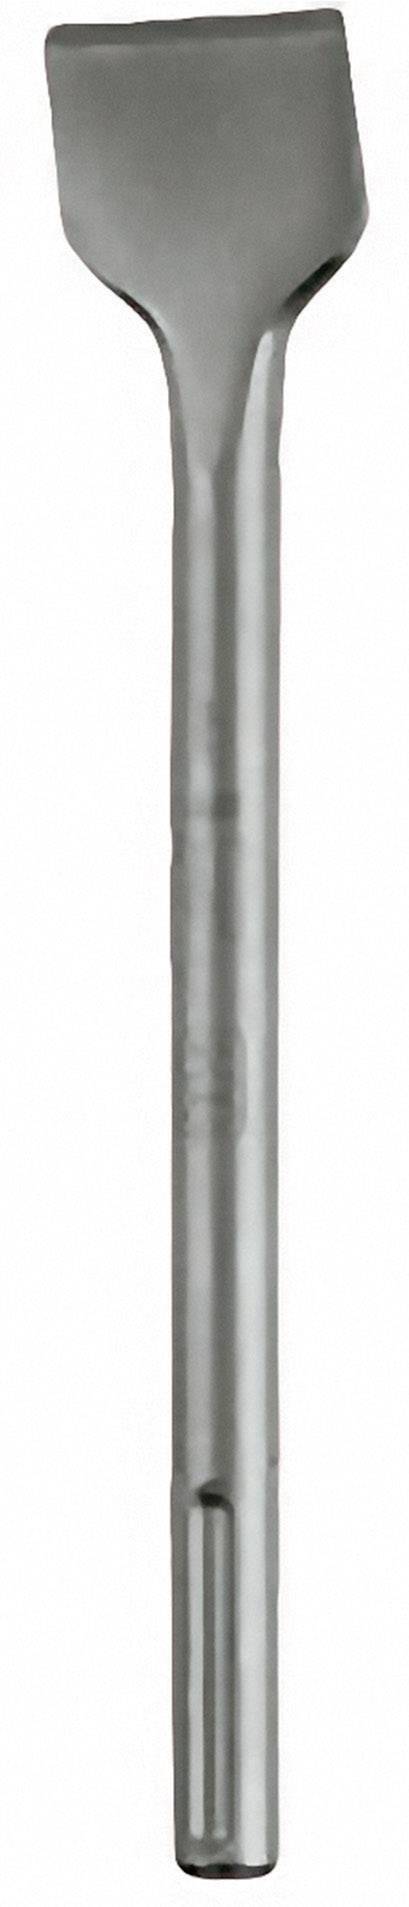 HELLER Flachmeißel 75 mm Heller 16811 3 Gesamtlänge 165 mm SDS-Plus 1 St.